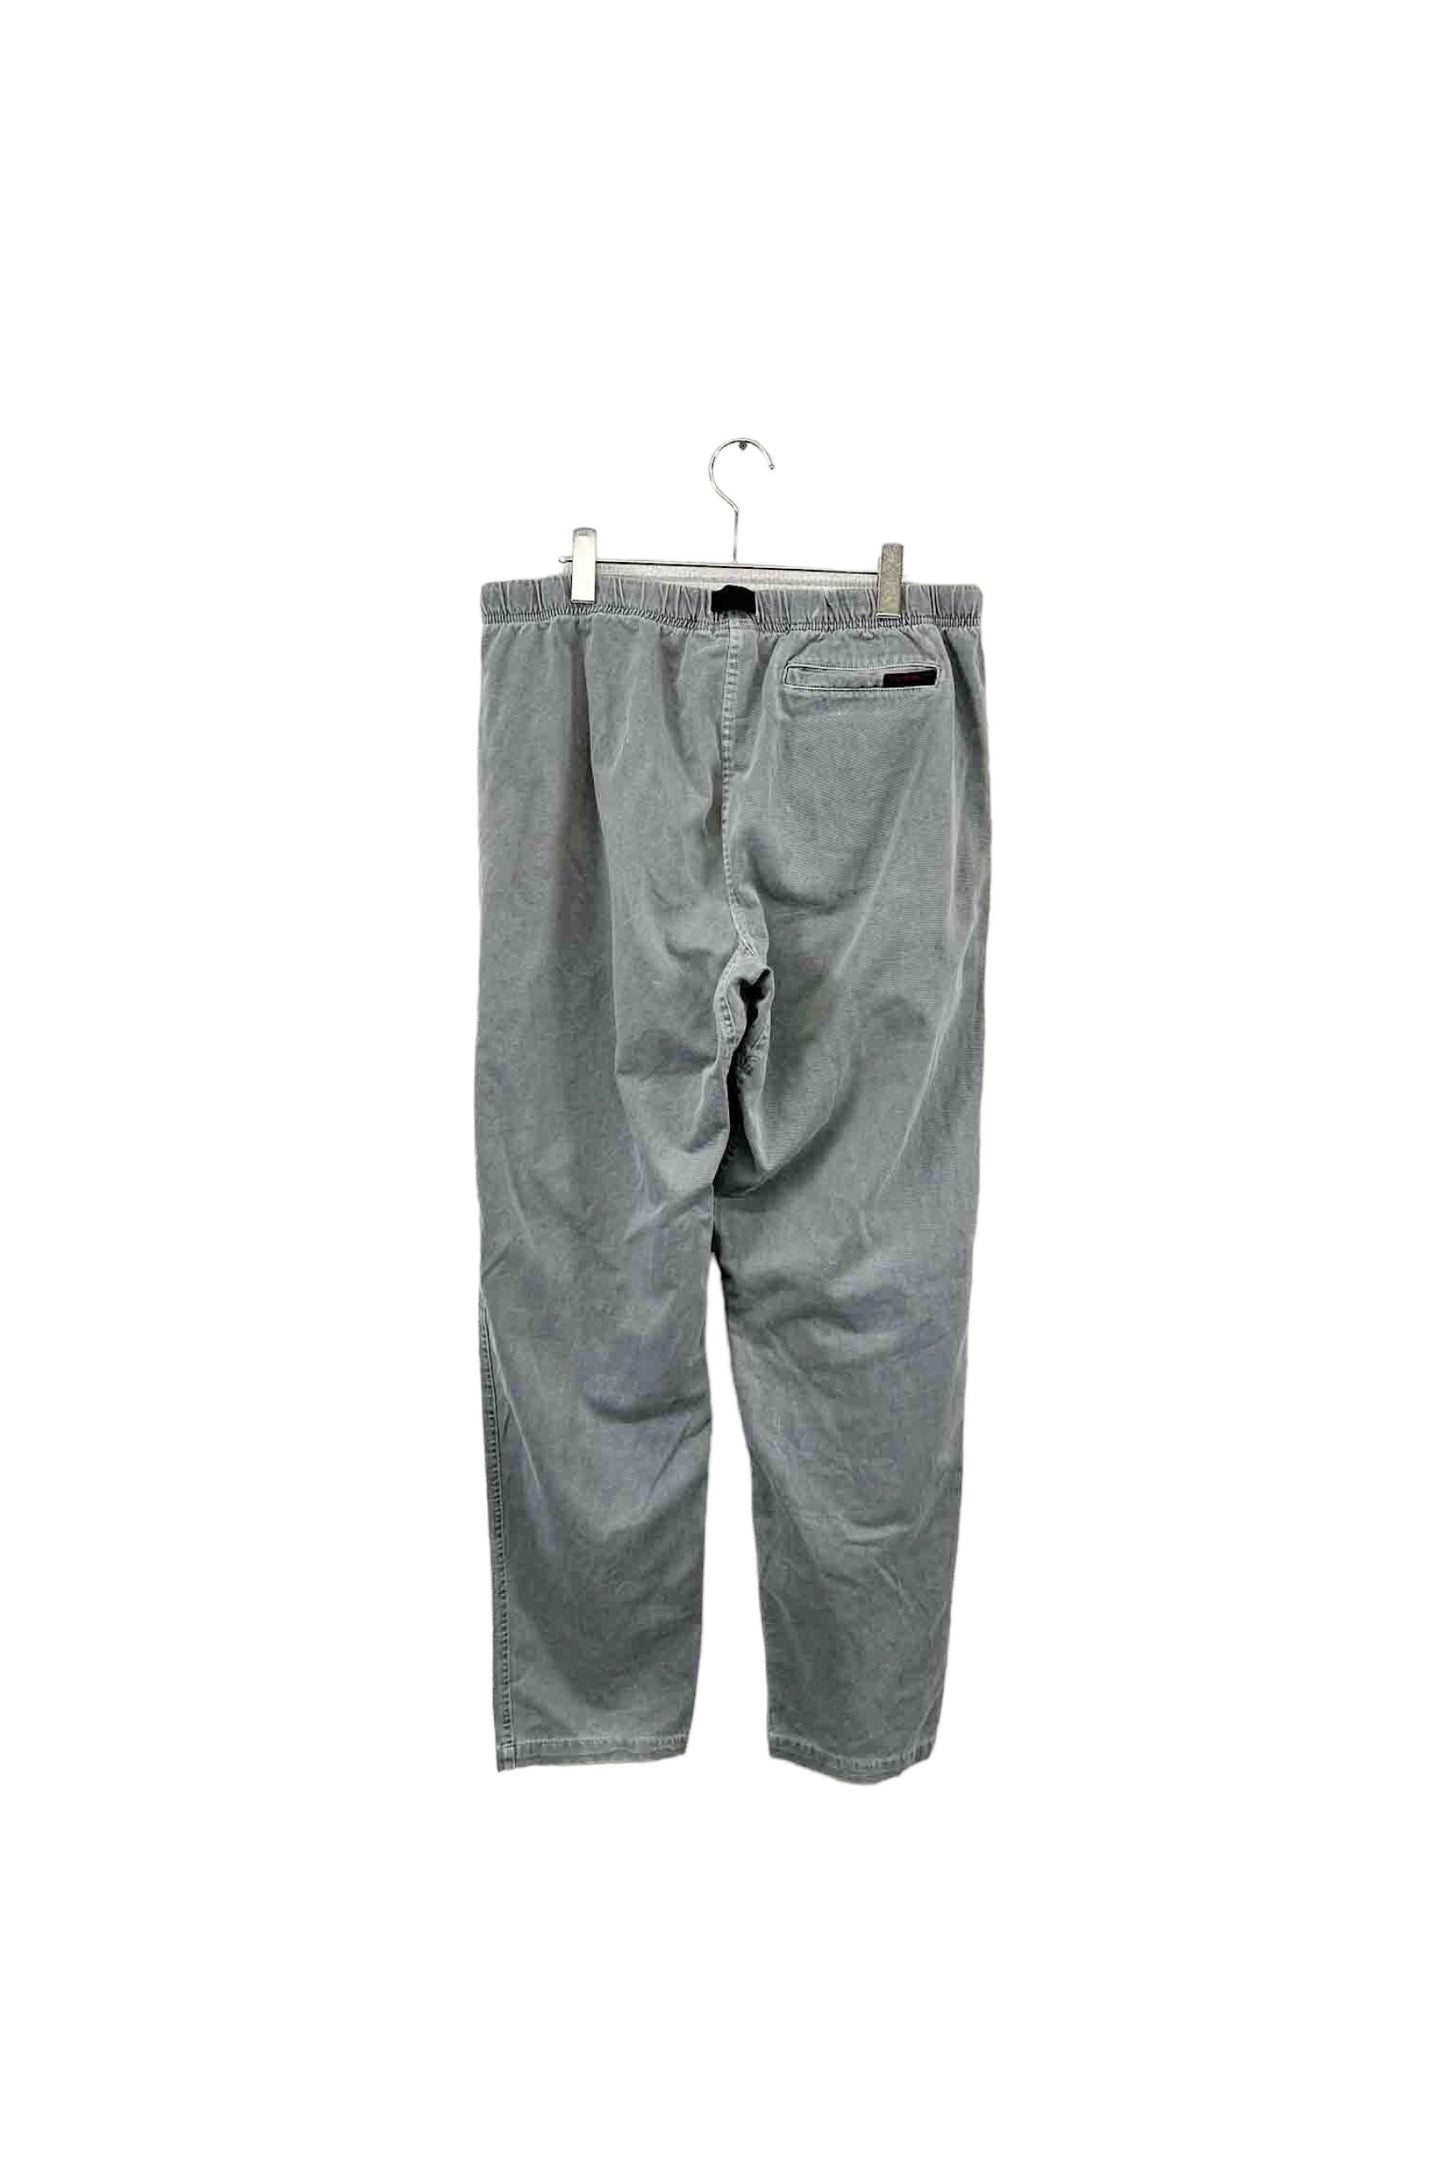 Made in USA GRAMICCI gray climbing pants